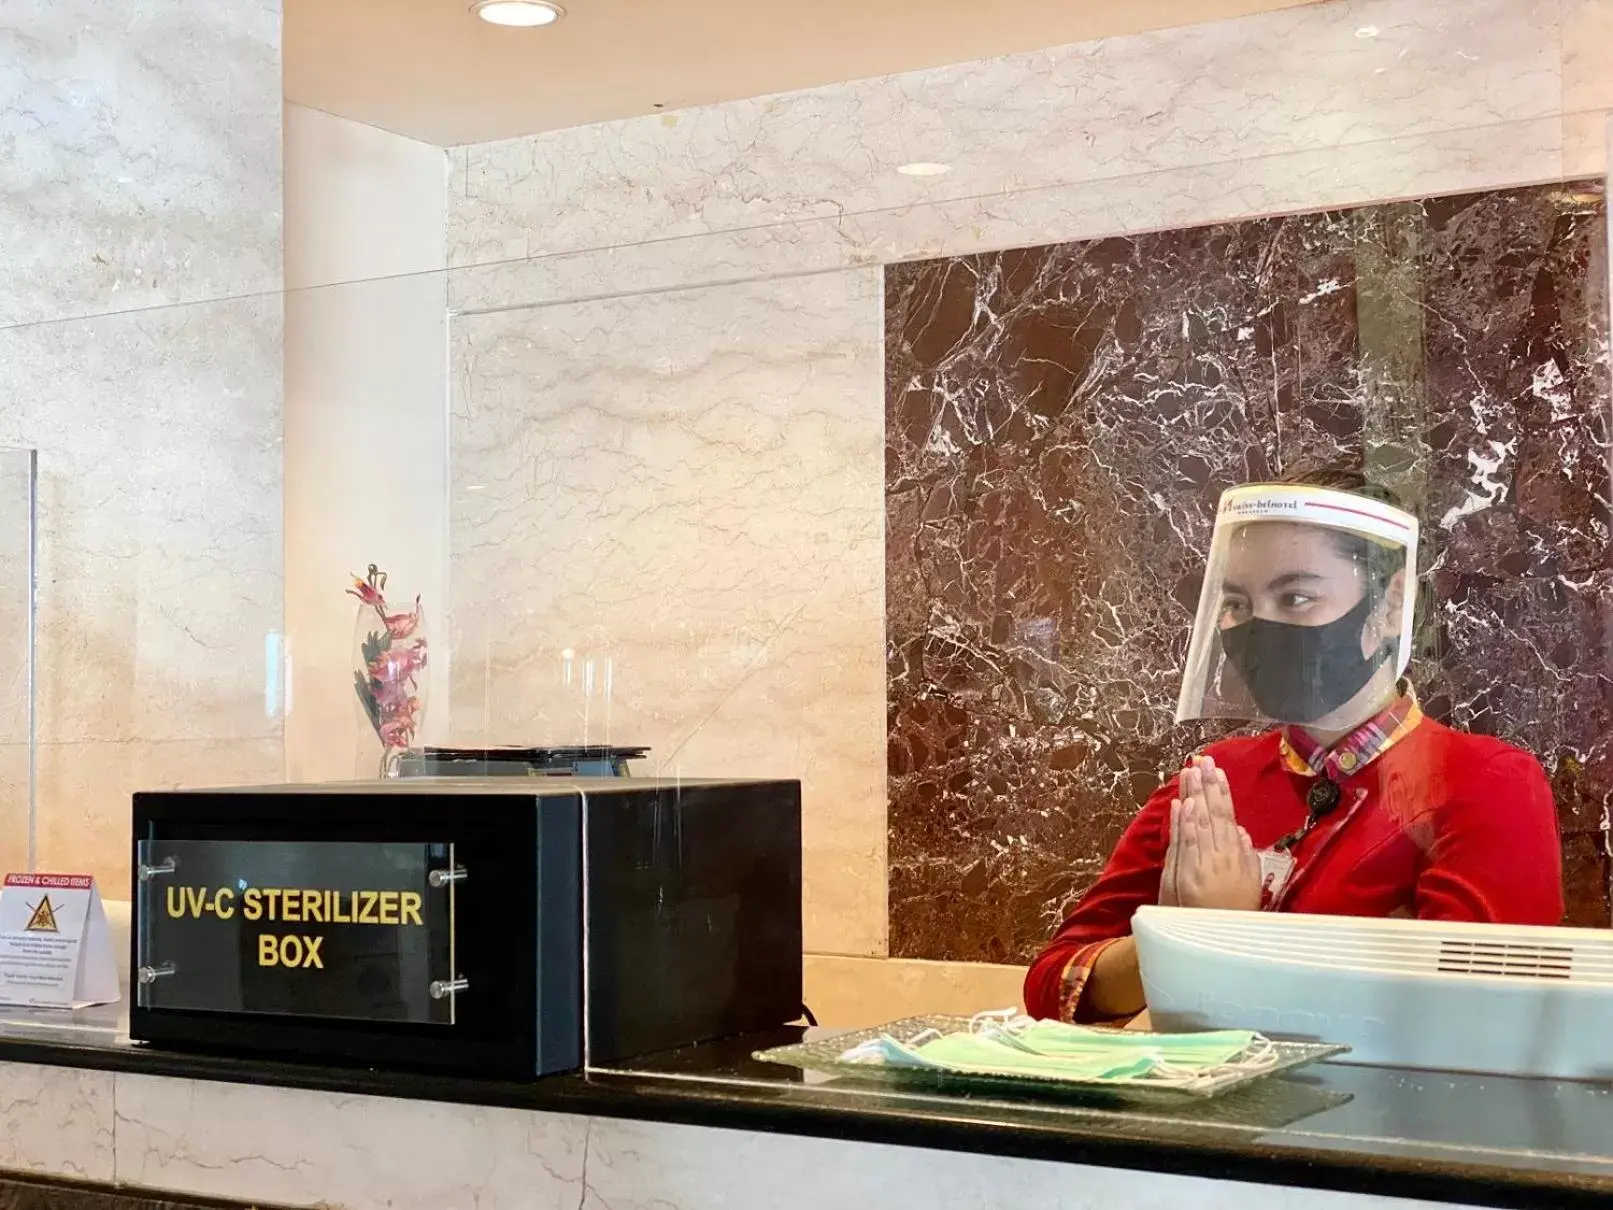 Lobby or reception in Swiss-Belhotel Makassar